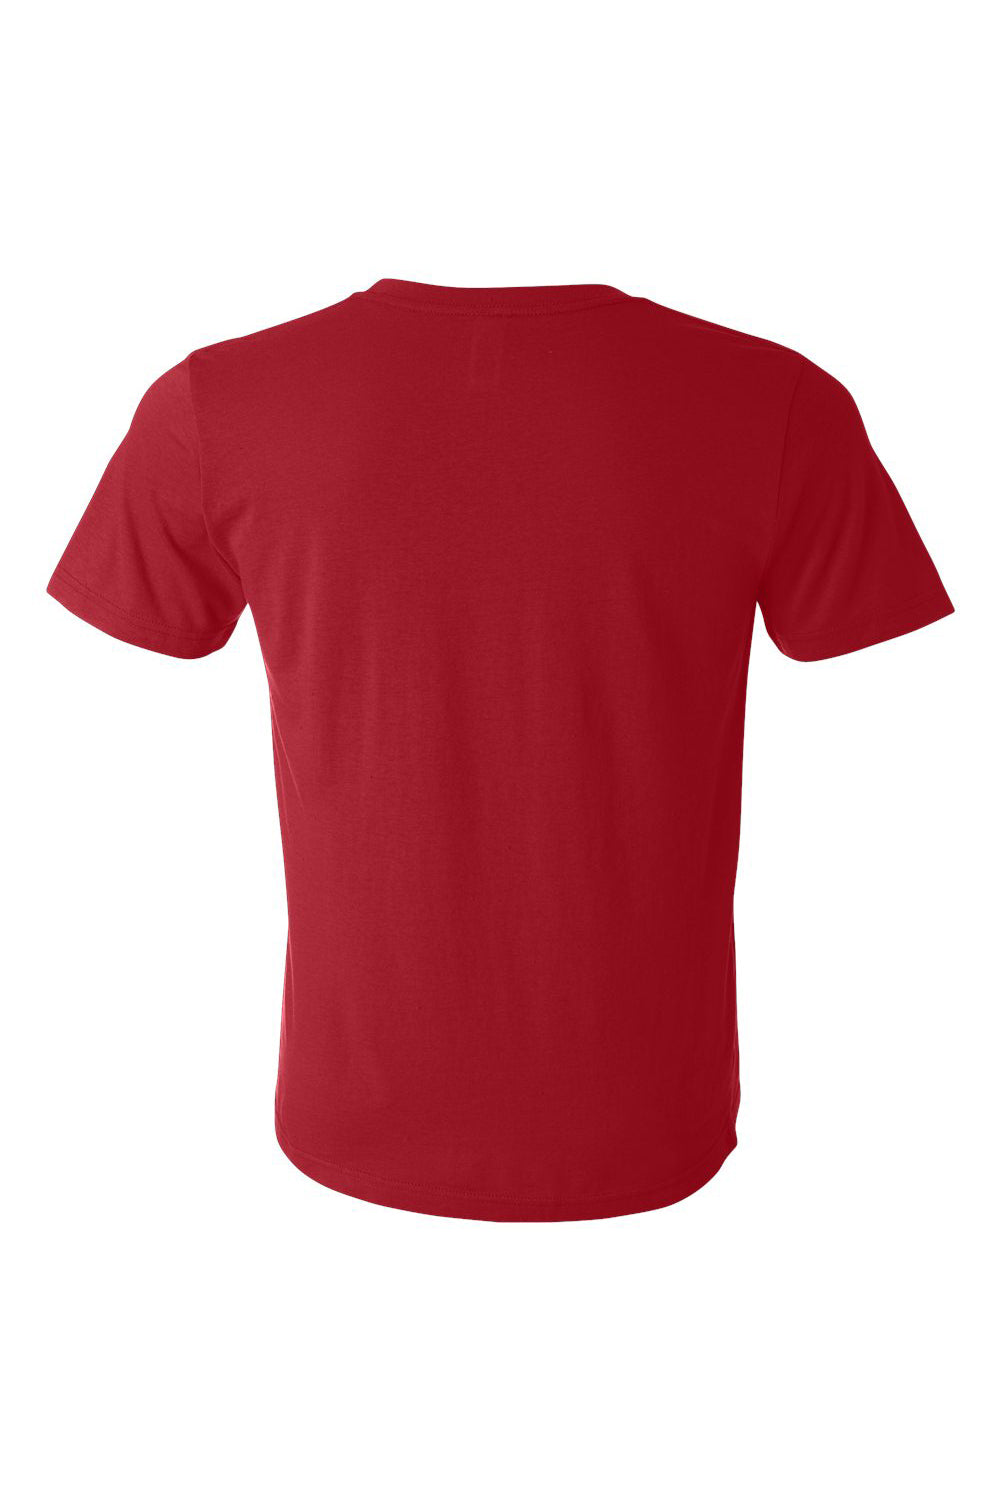 Bella + Canvas BC3650/3650 Mens Short Sleeve Crewneck T-Shirt Red Flat Back